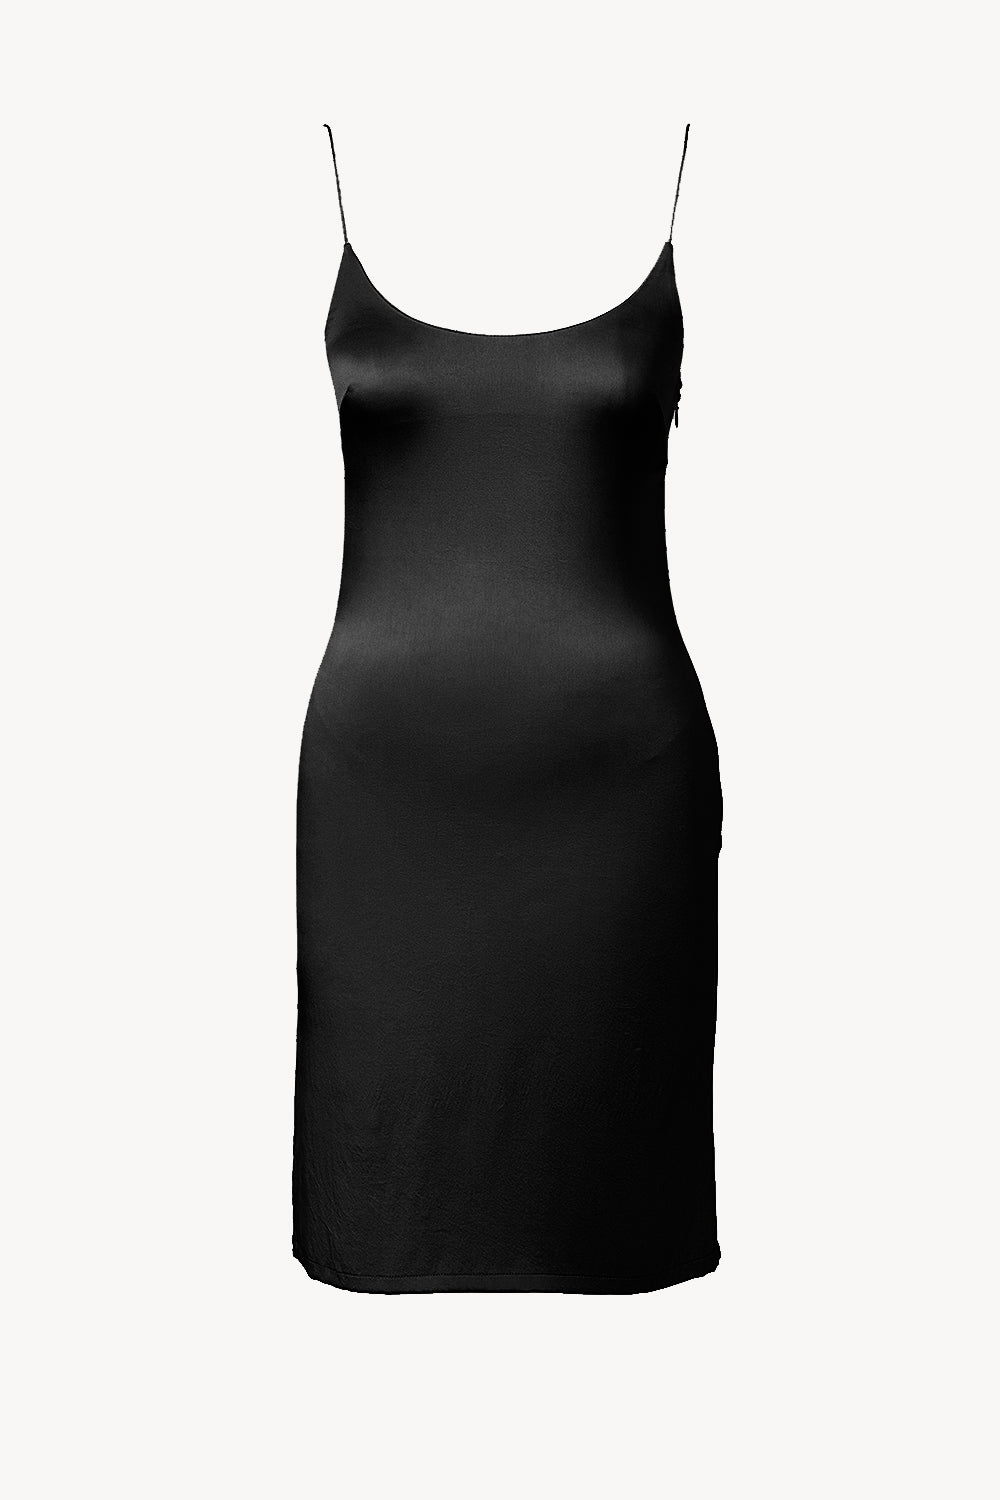 Rowan Silk Dress Black · TOVE Studio · Advanced Contemporary Womenswear ...